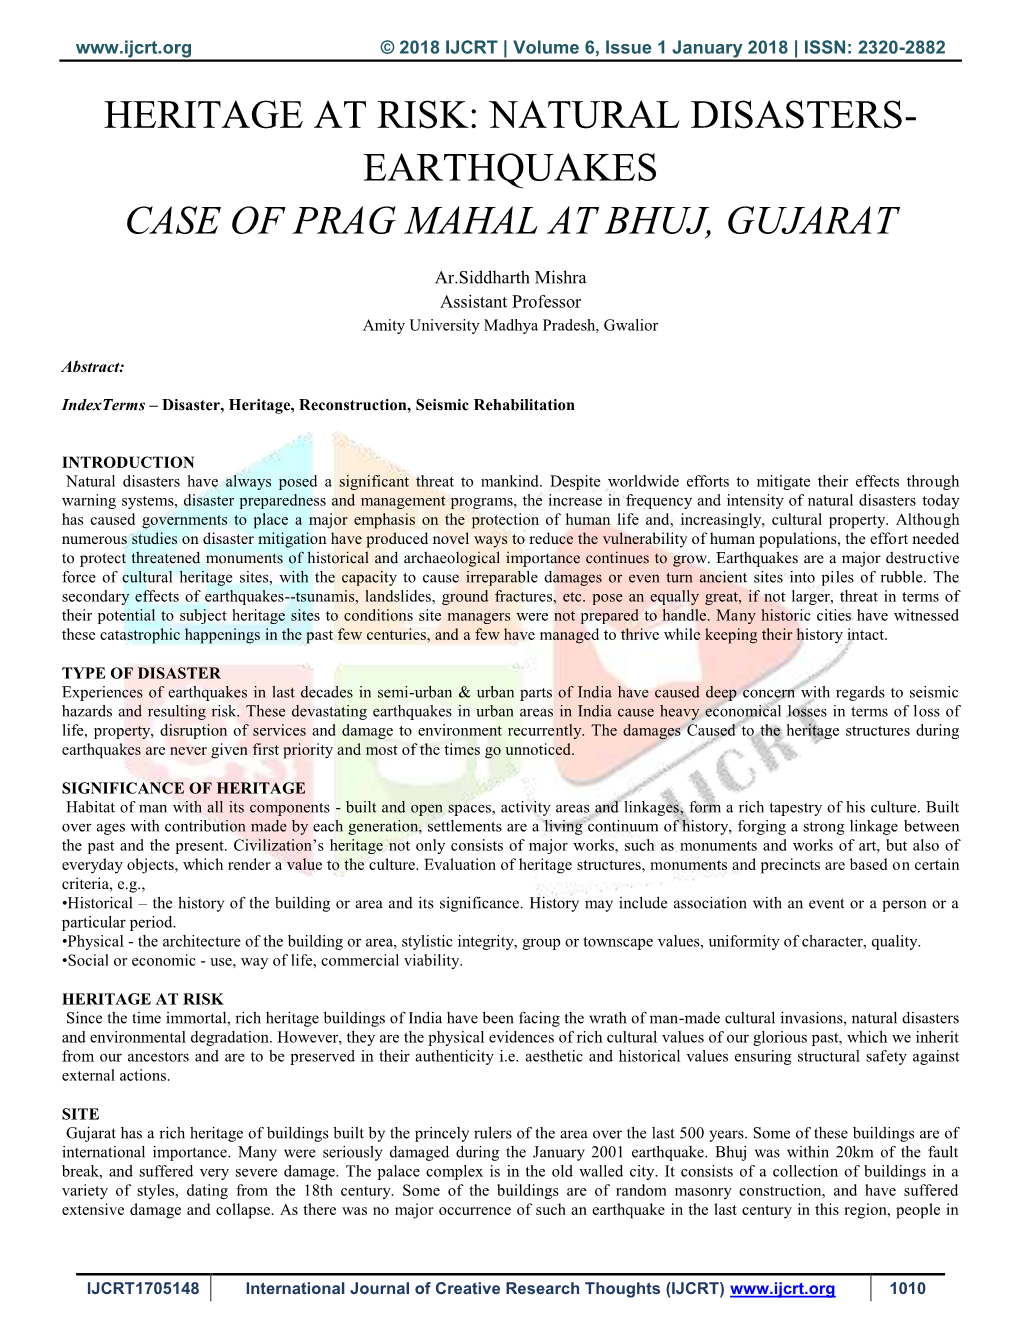 Earthquakes Case of Prag Mahal at Bhuj, Gujarat